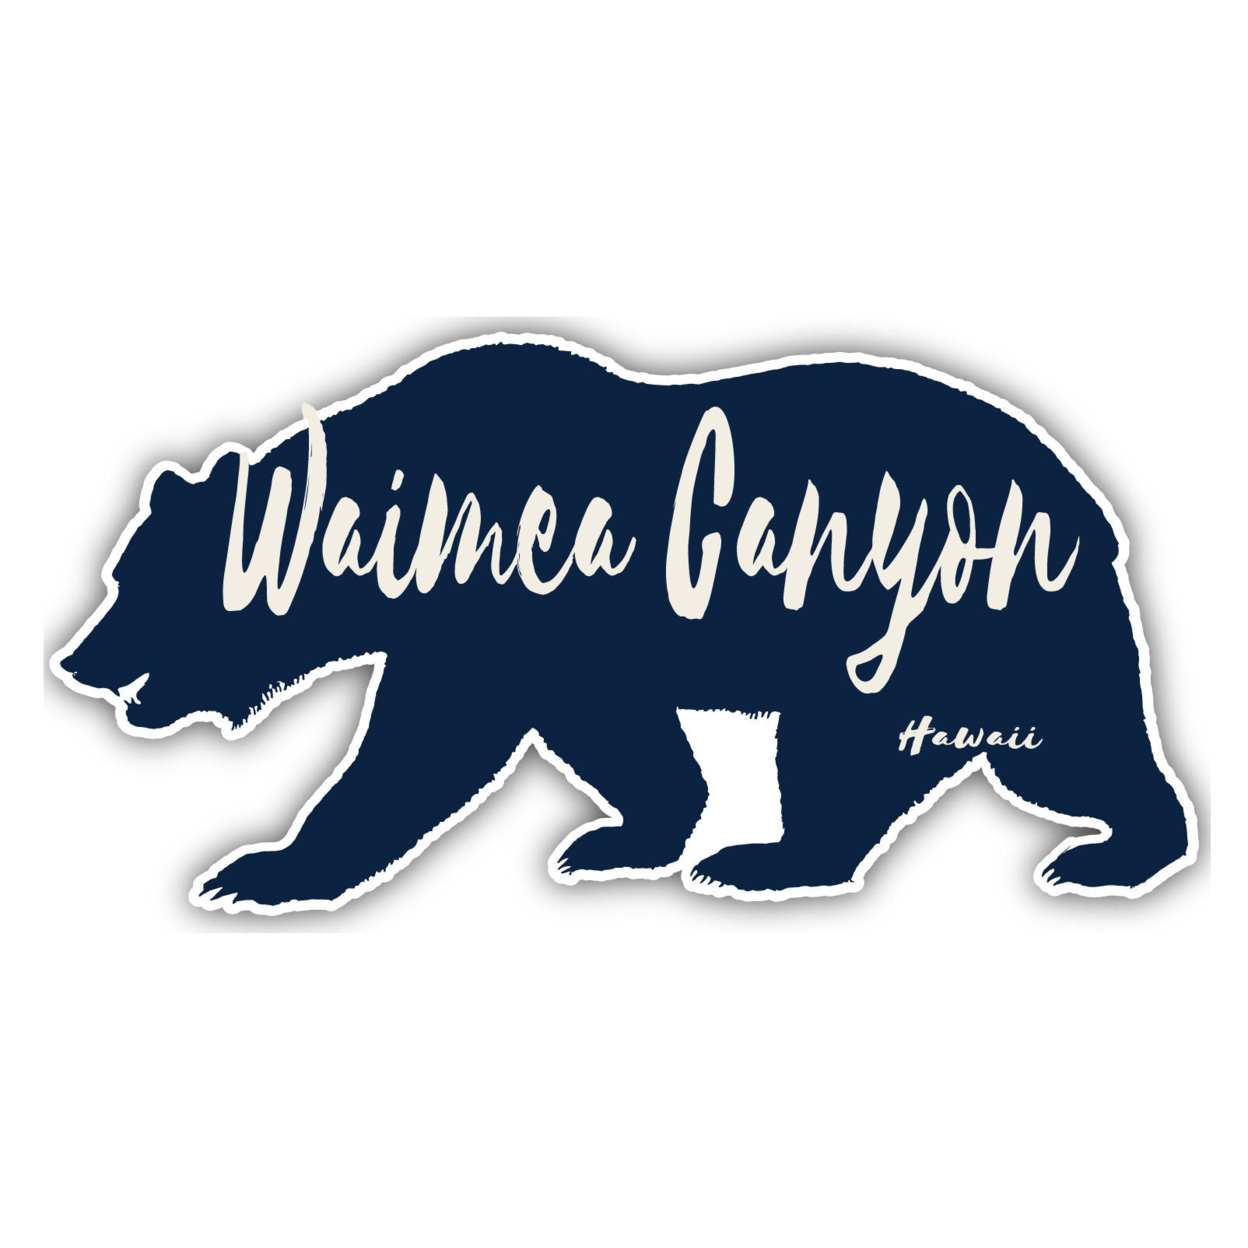 Waimea Canyon Hawaii Souvenir Decorative Stickers (Choose Theme And Size) - Single Unit, 4-Inch, Bear